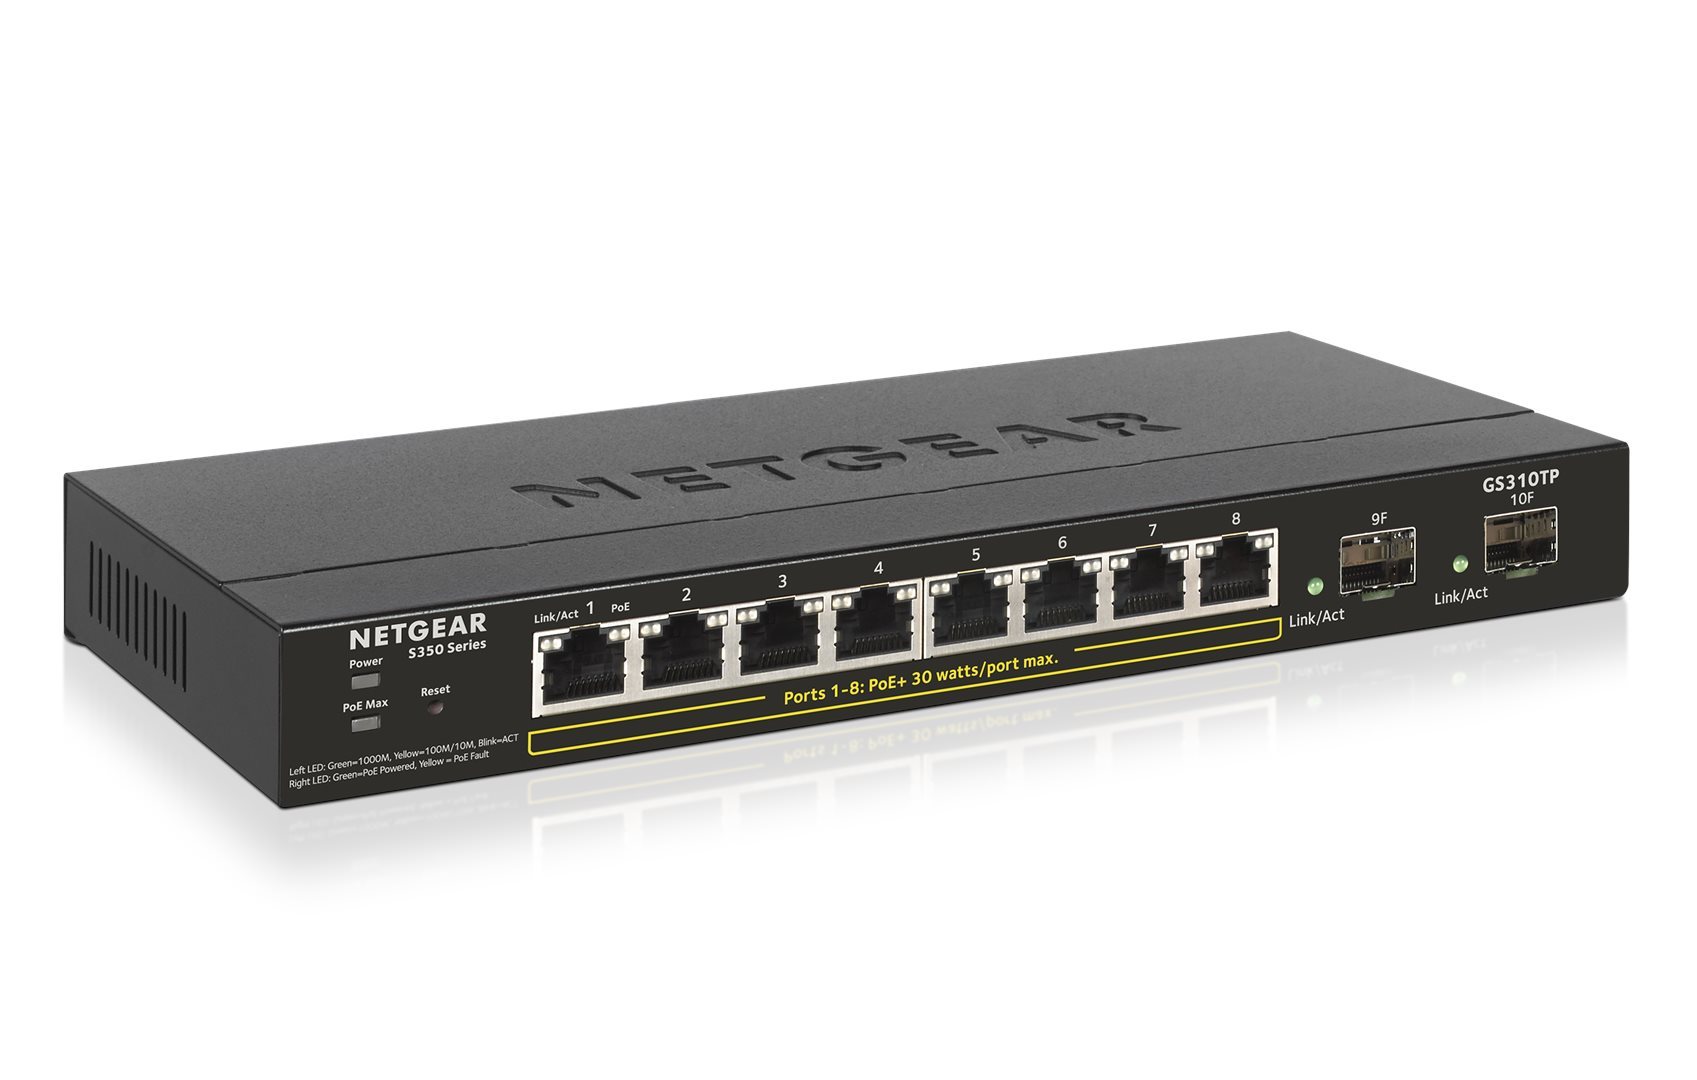 NETGEAR S350 Series 8-port Gigabit PoE+ Ethernet Smart Managed Pro Switch with 2 SFP Ports, GS310TP